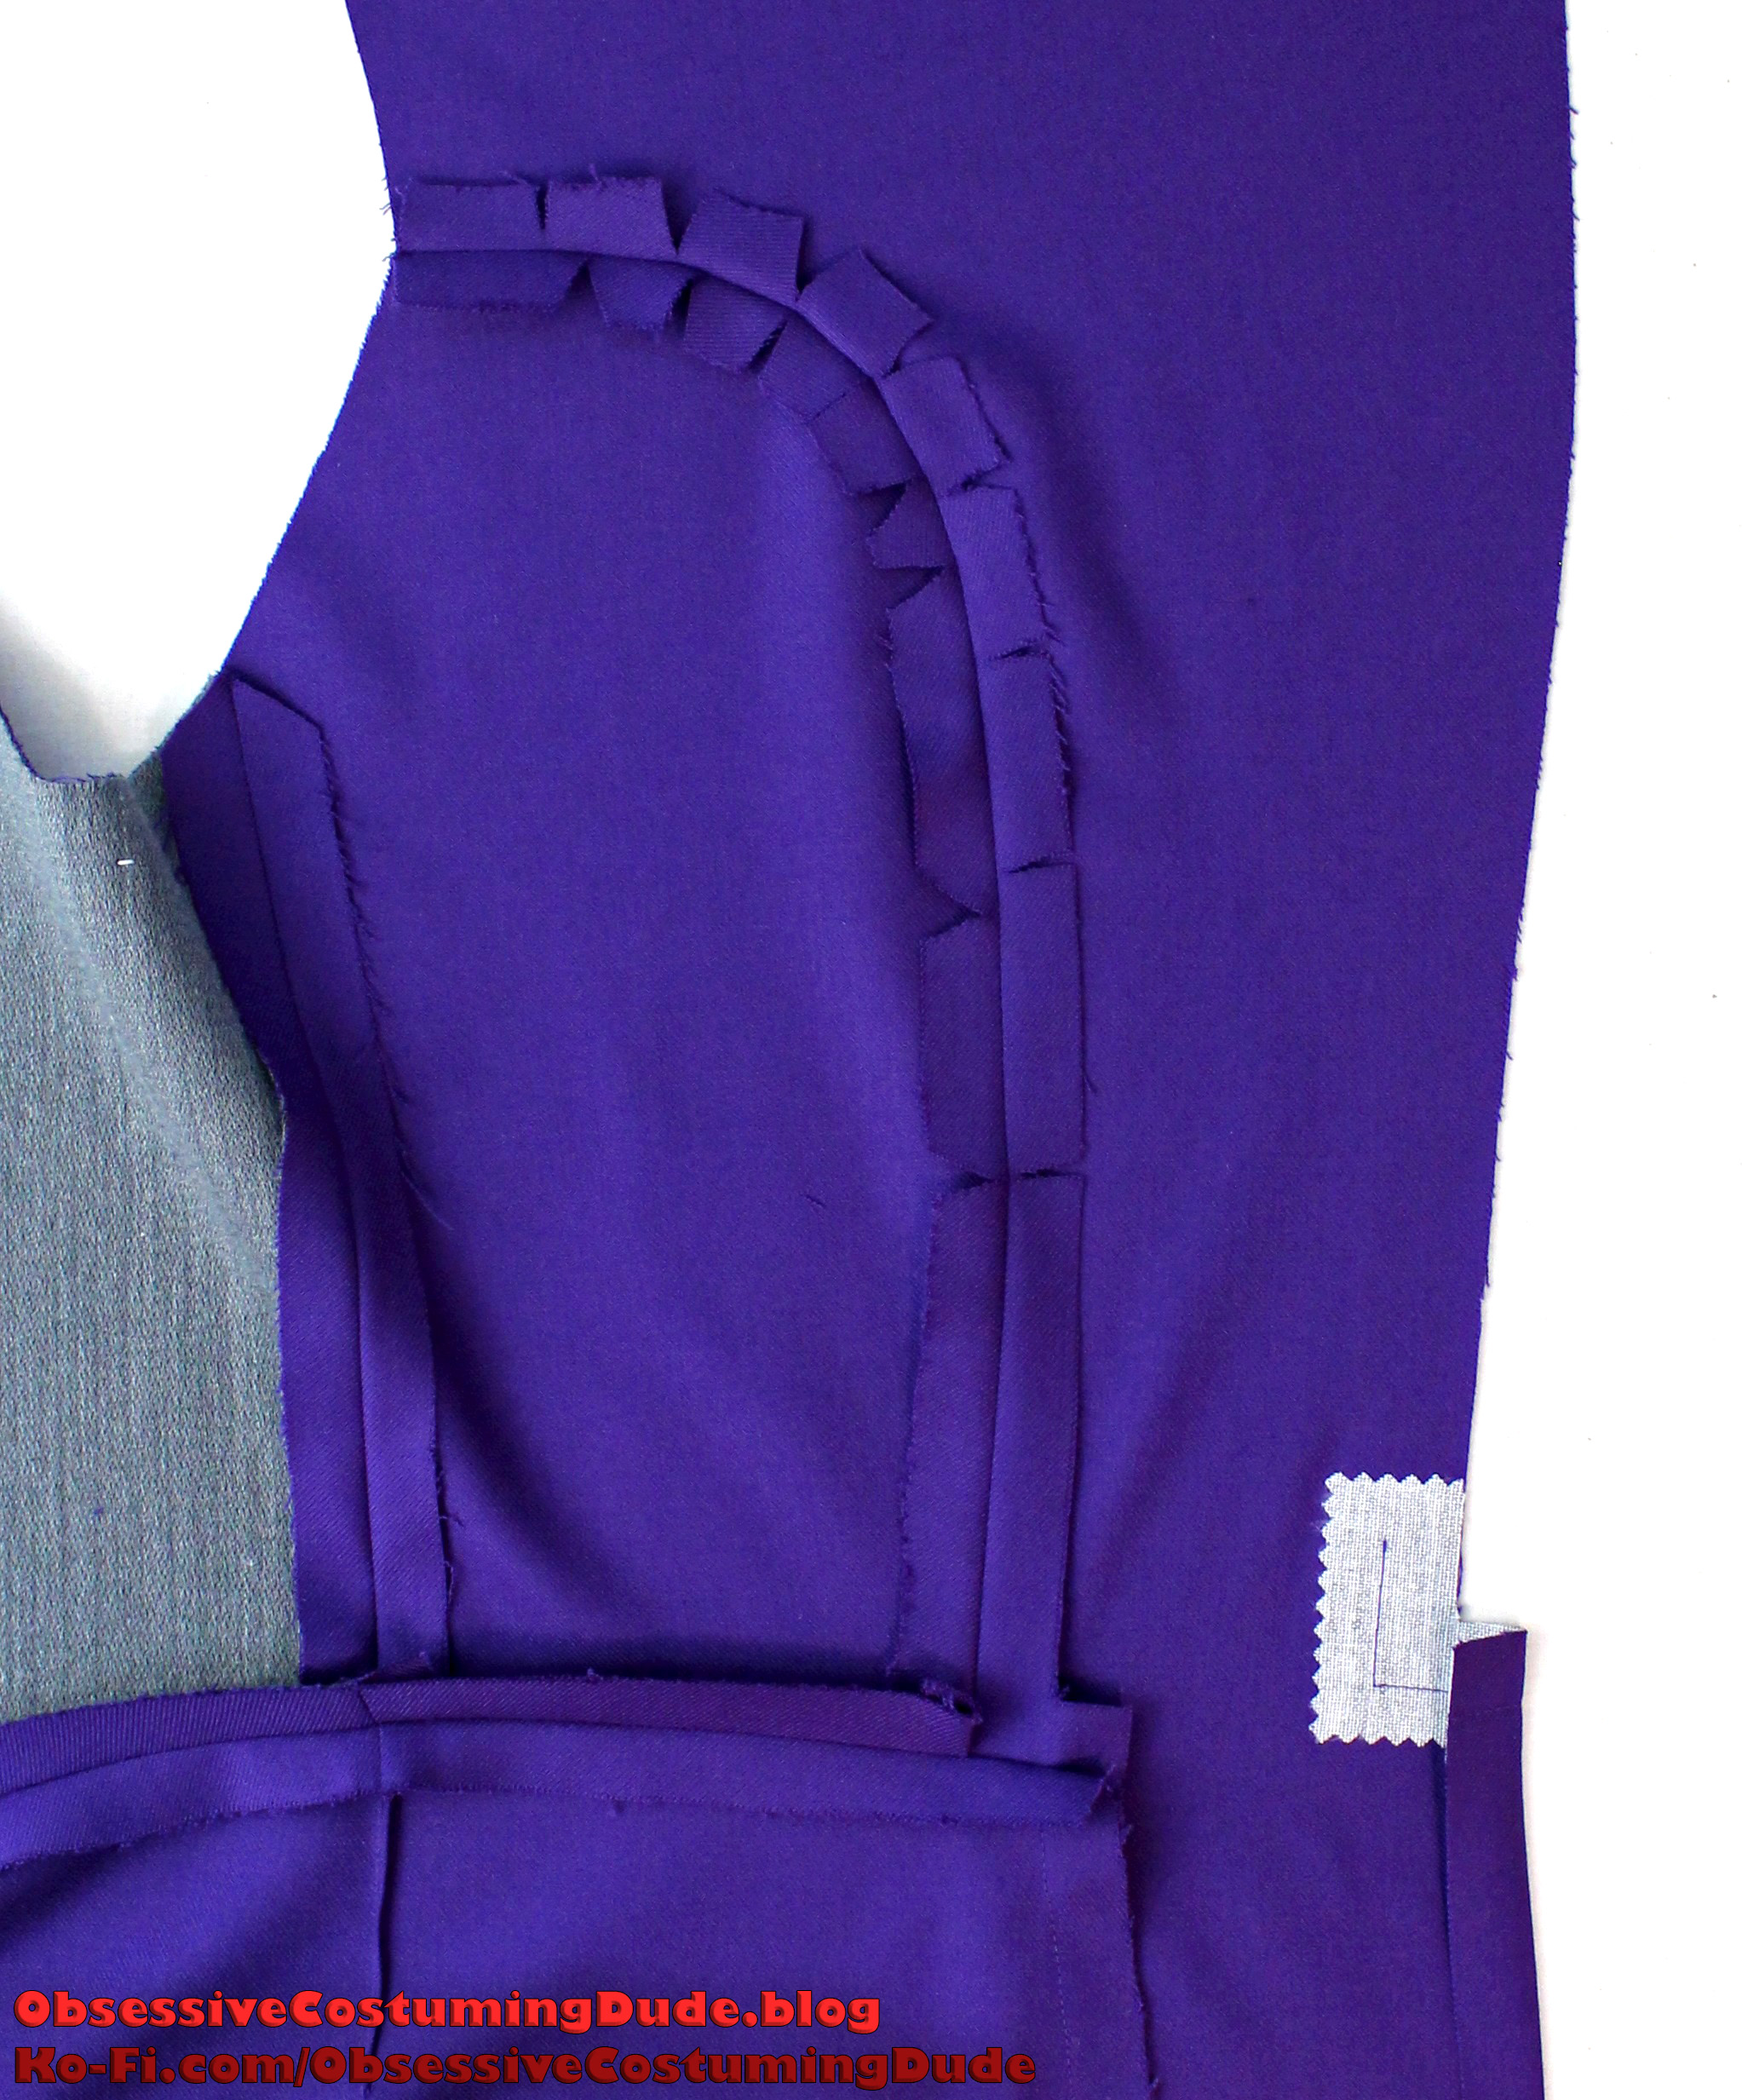 Joker tailcoat sewing tutorial - Obsessive Costuming Dude